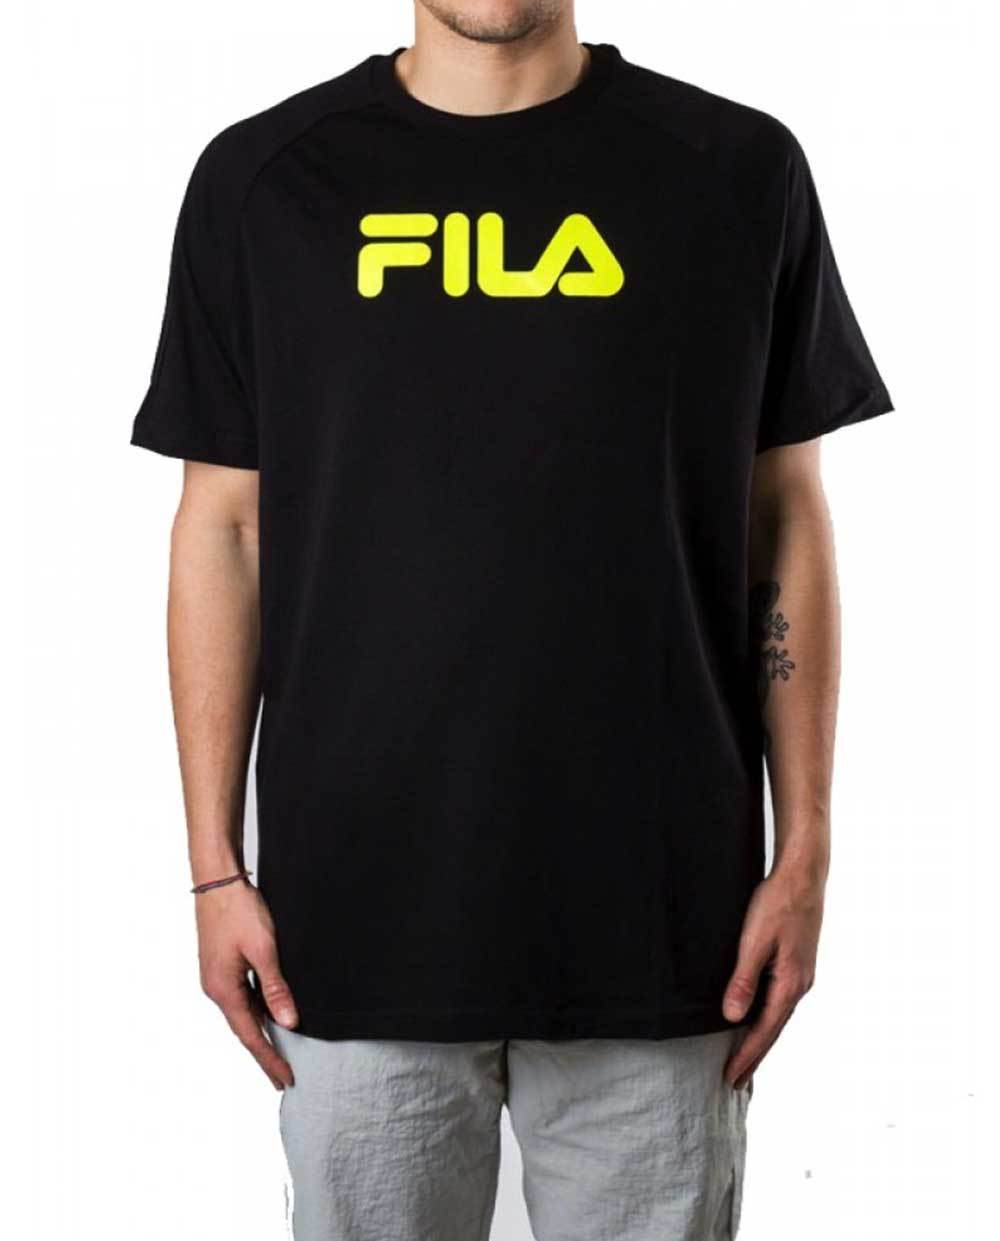 Fila Black T-Shirt with Yellow